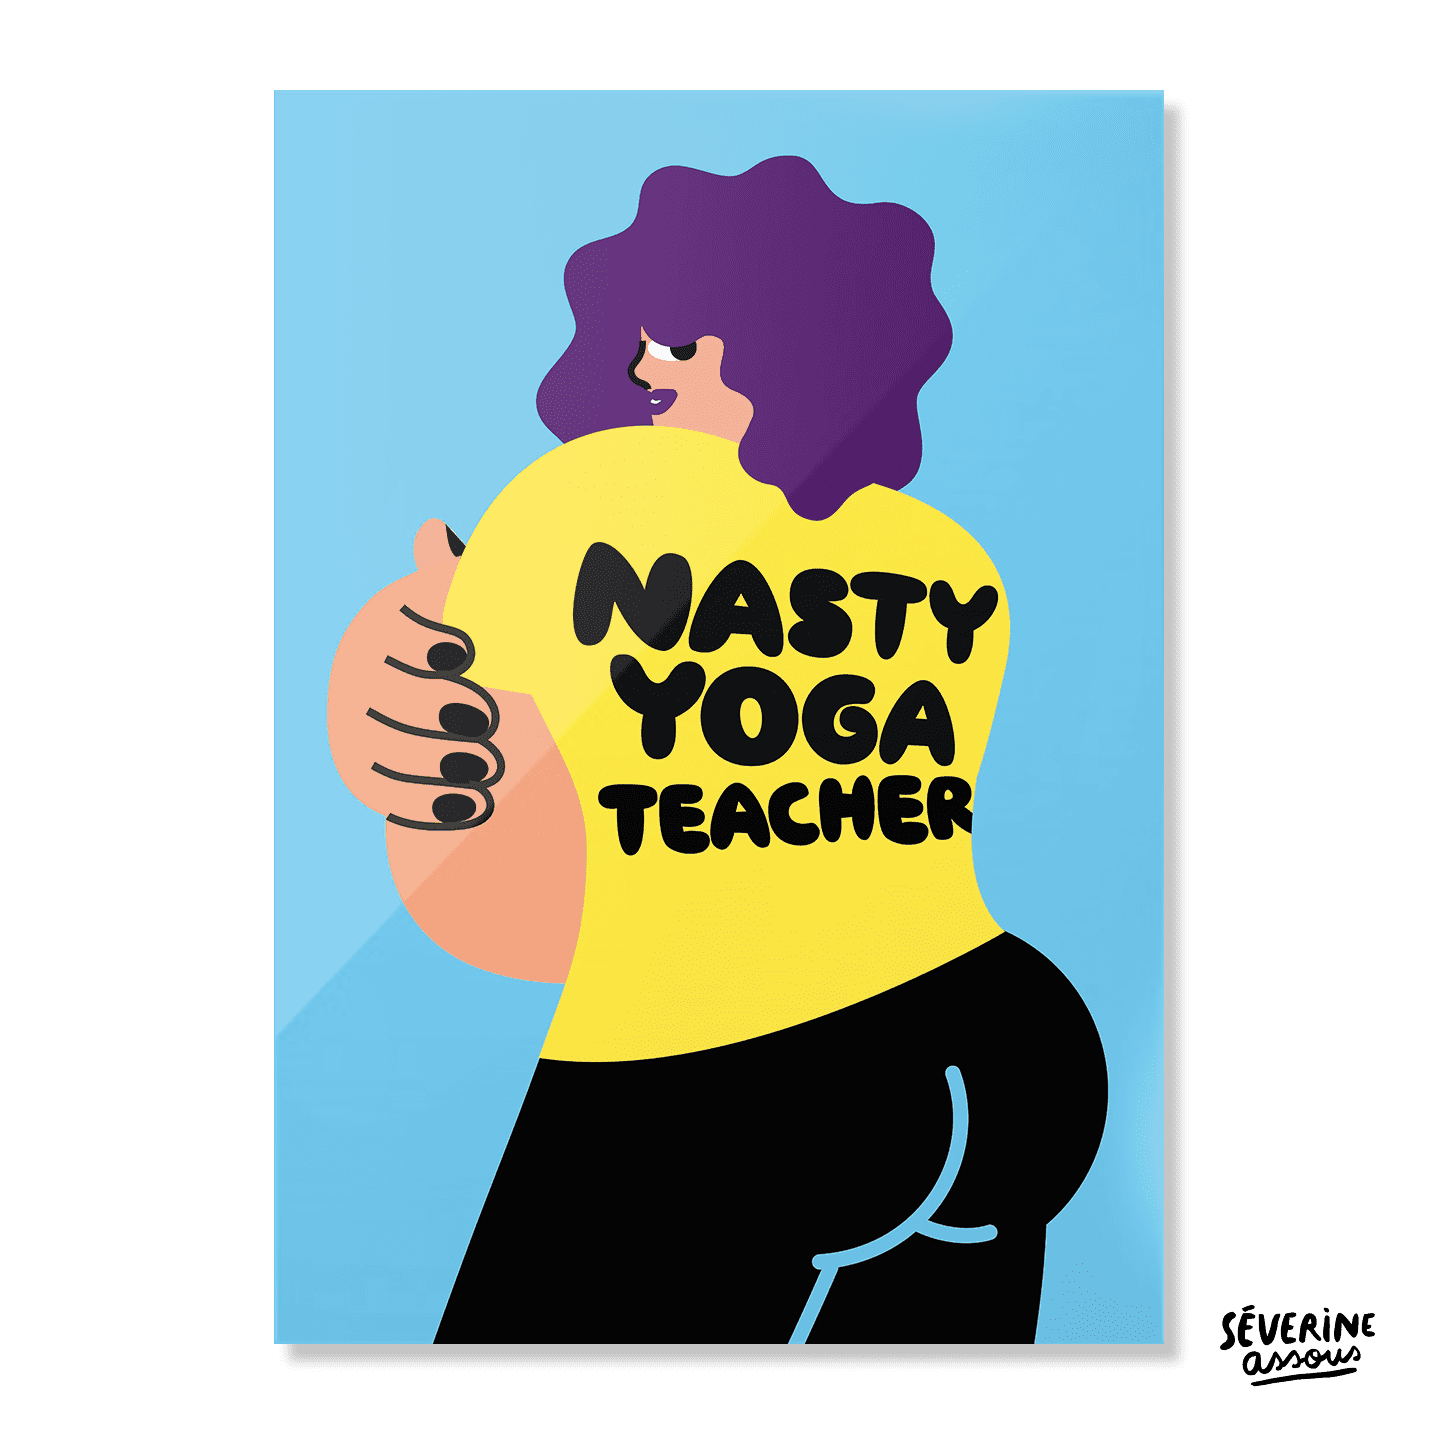 Nasty Yoga Teacher